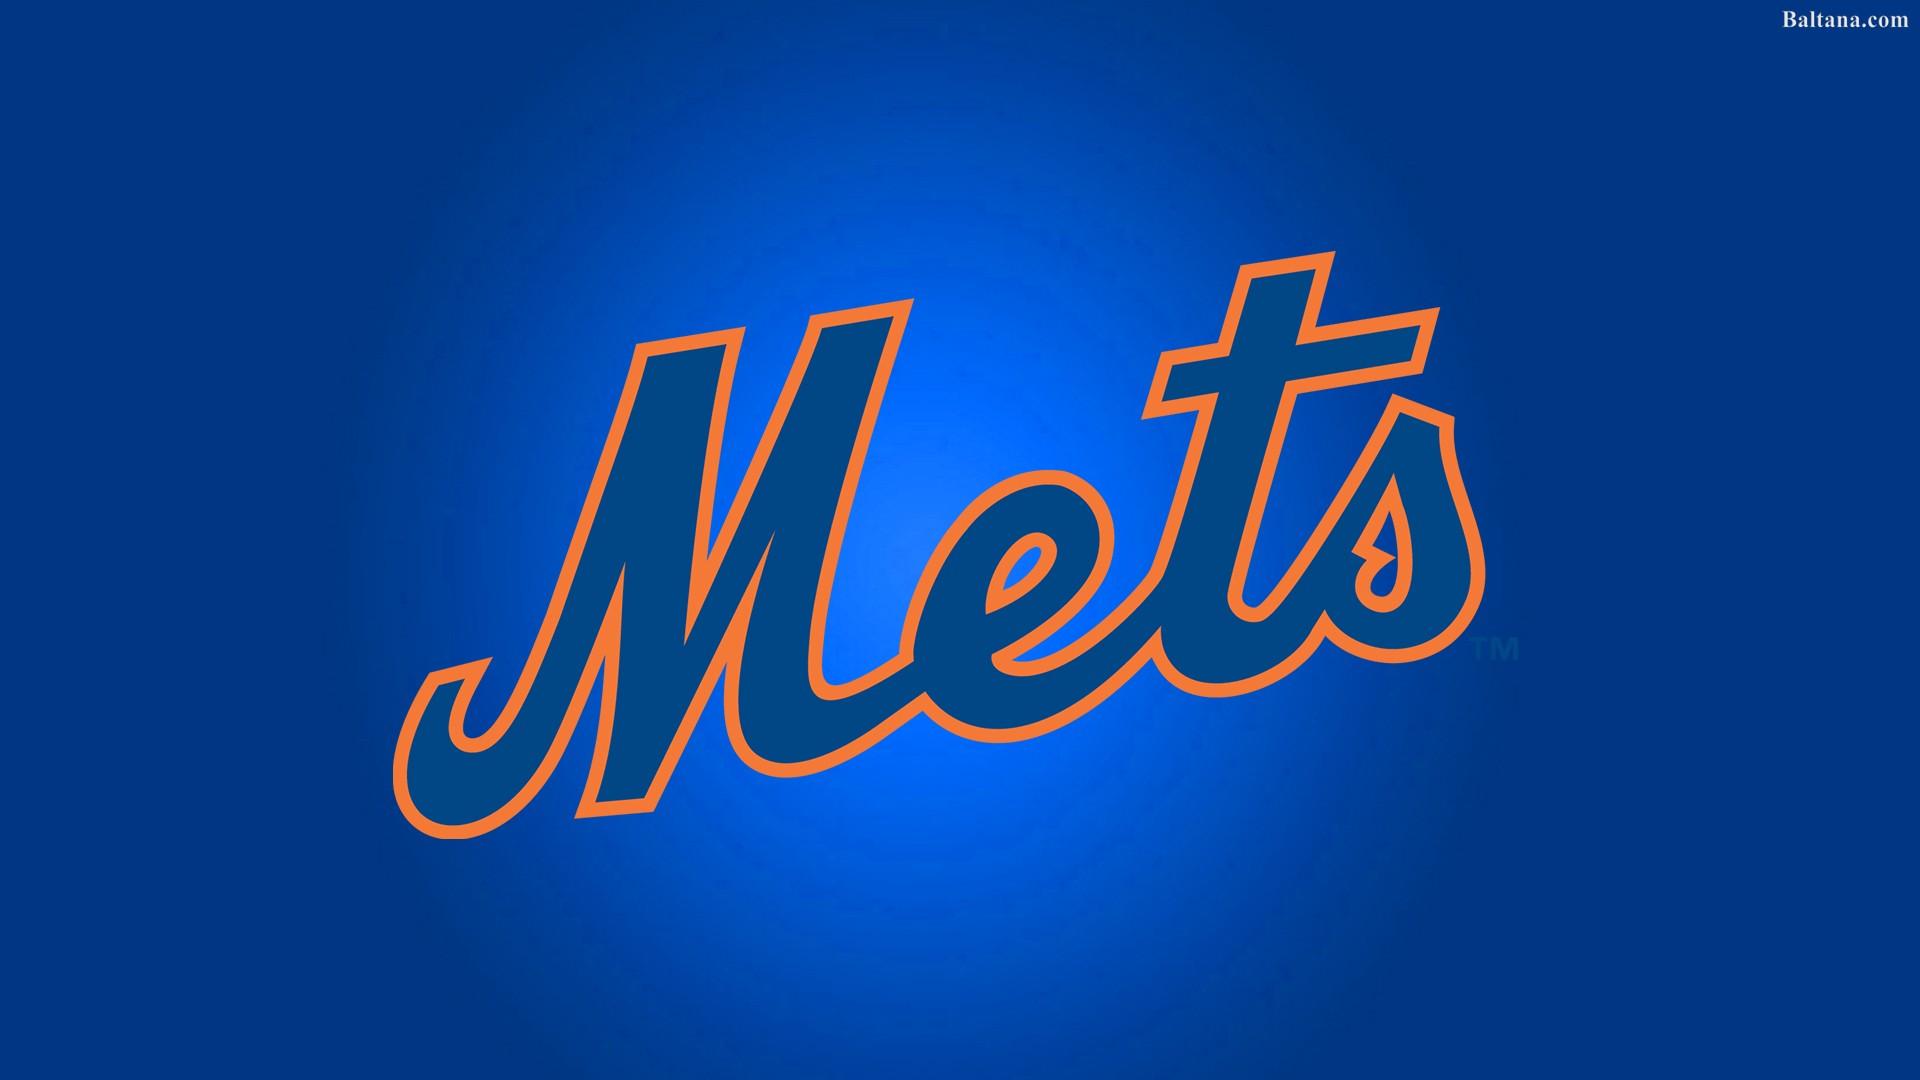 New York Mets Background Wallpaper 33213